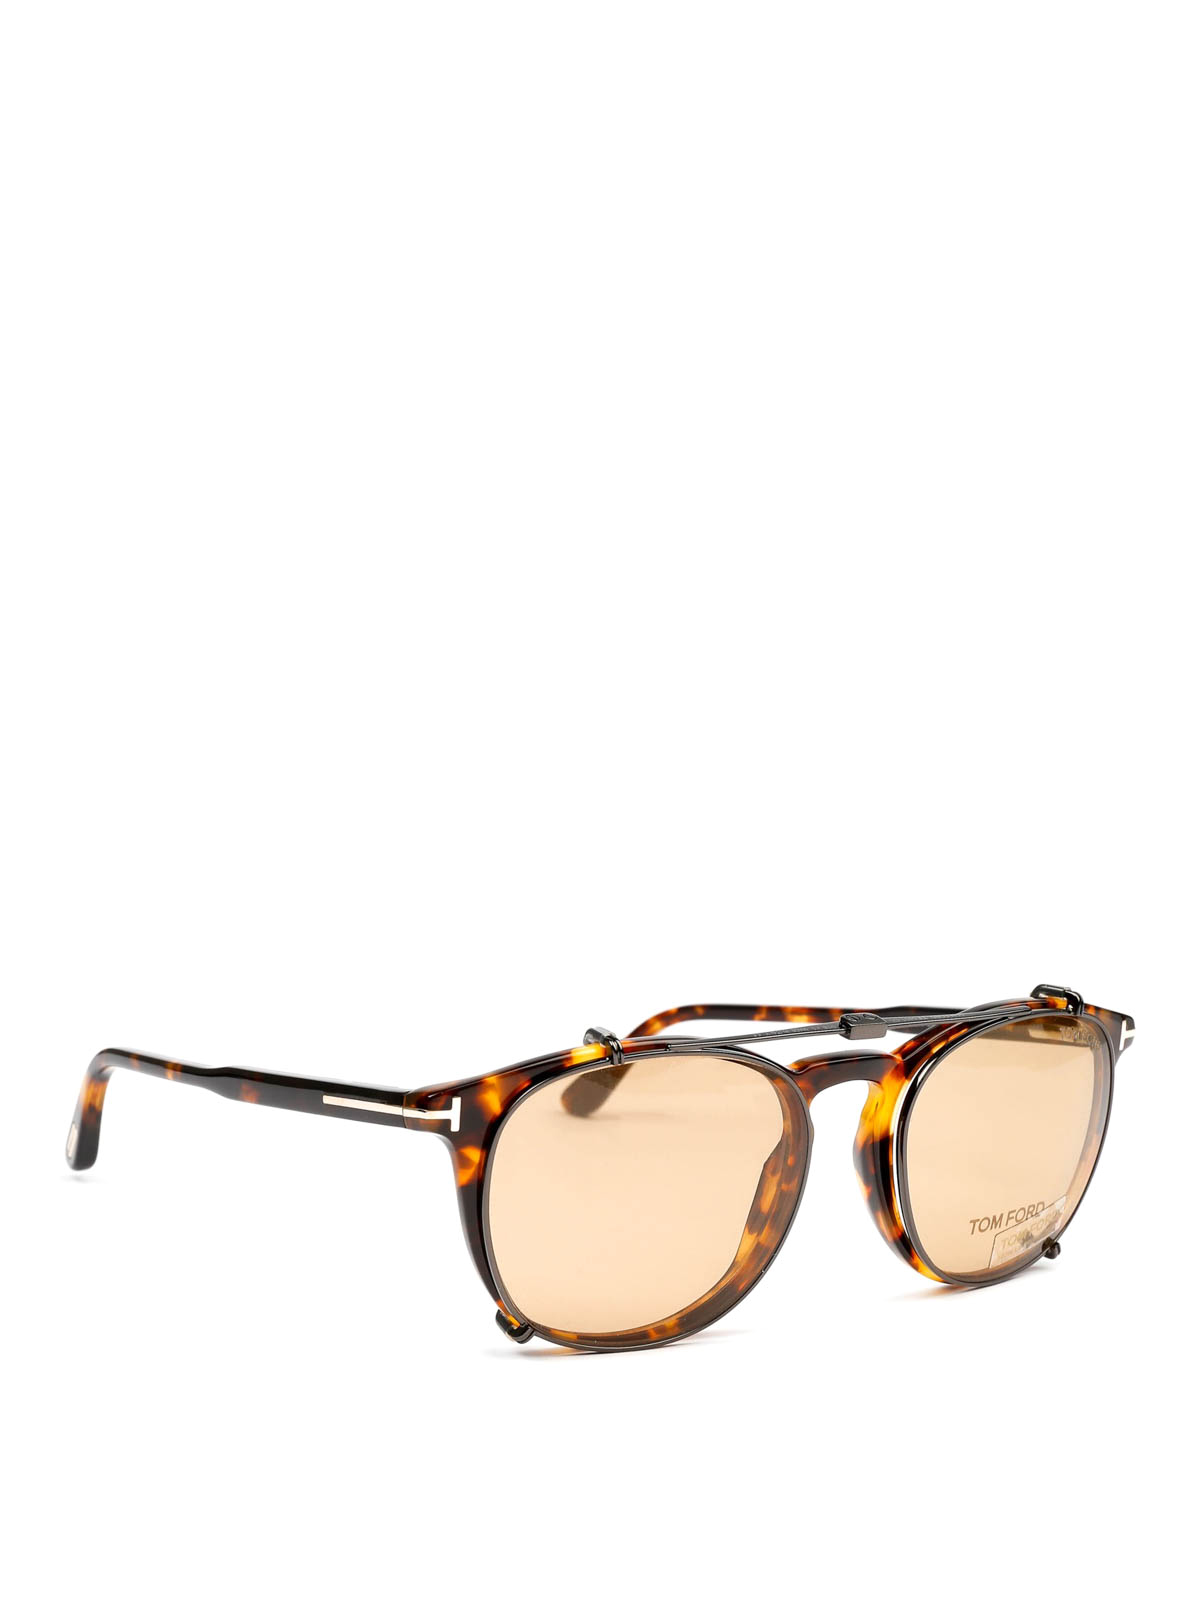 Sunglasses Tom Ford - Pink lens clip-on - FT5401CL01E 